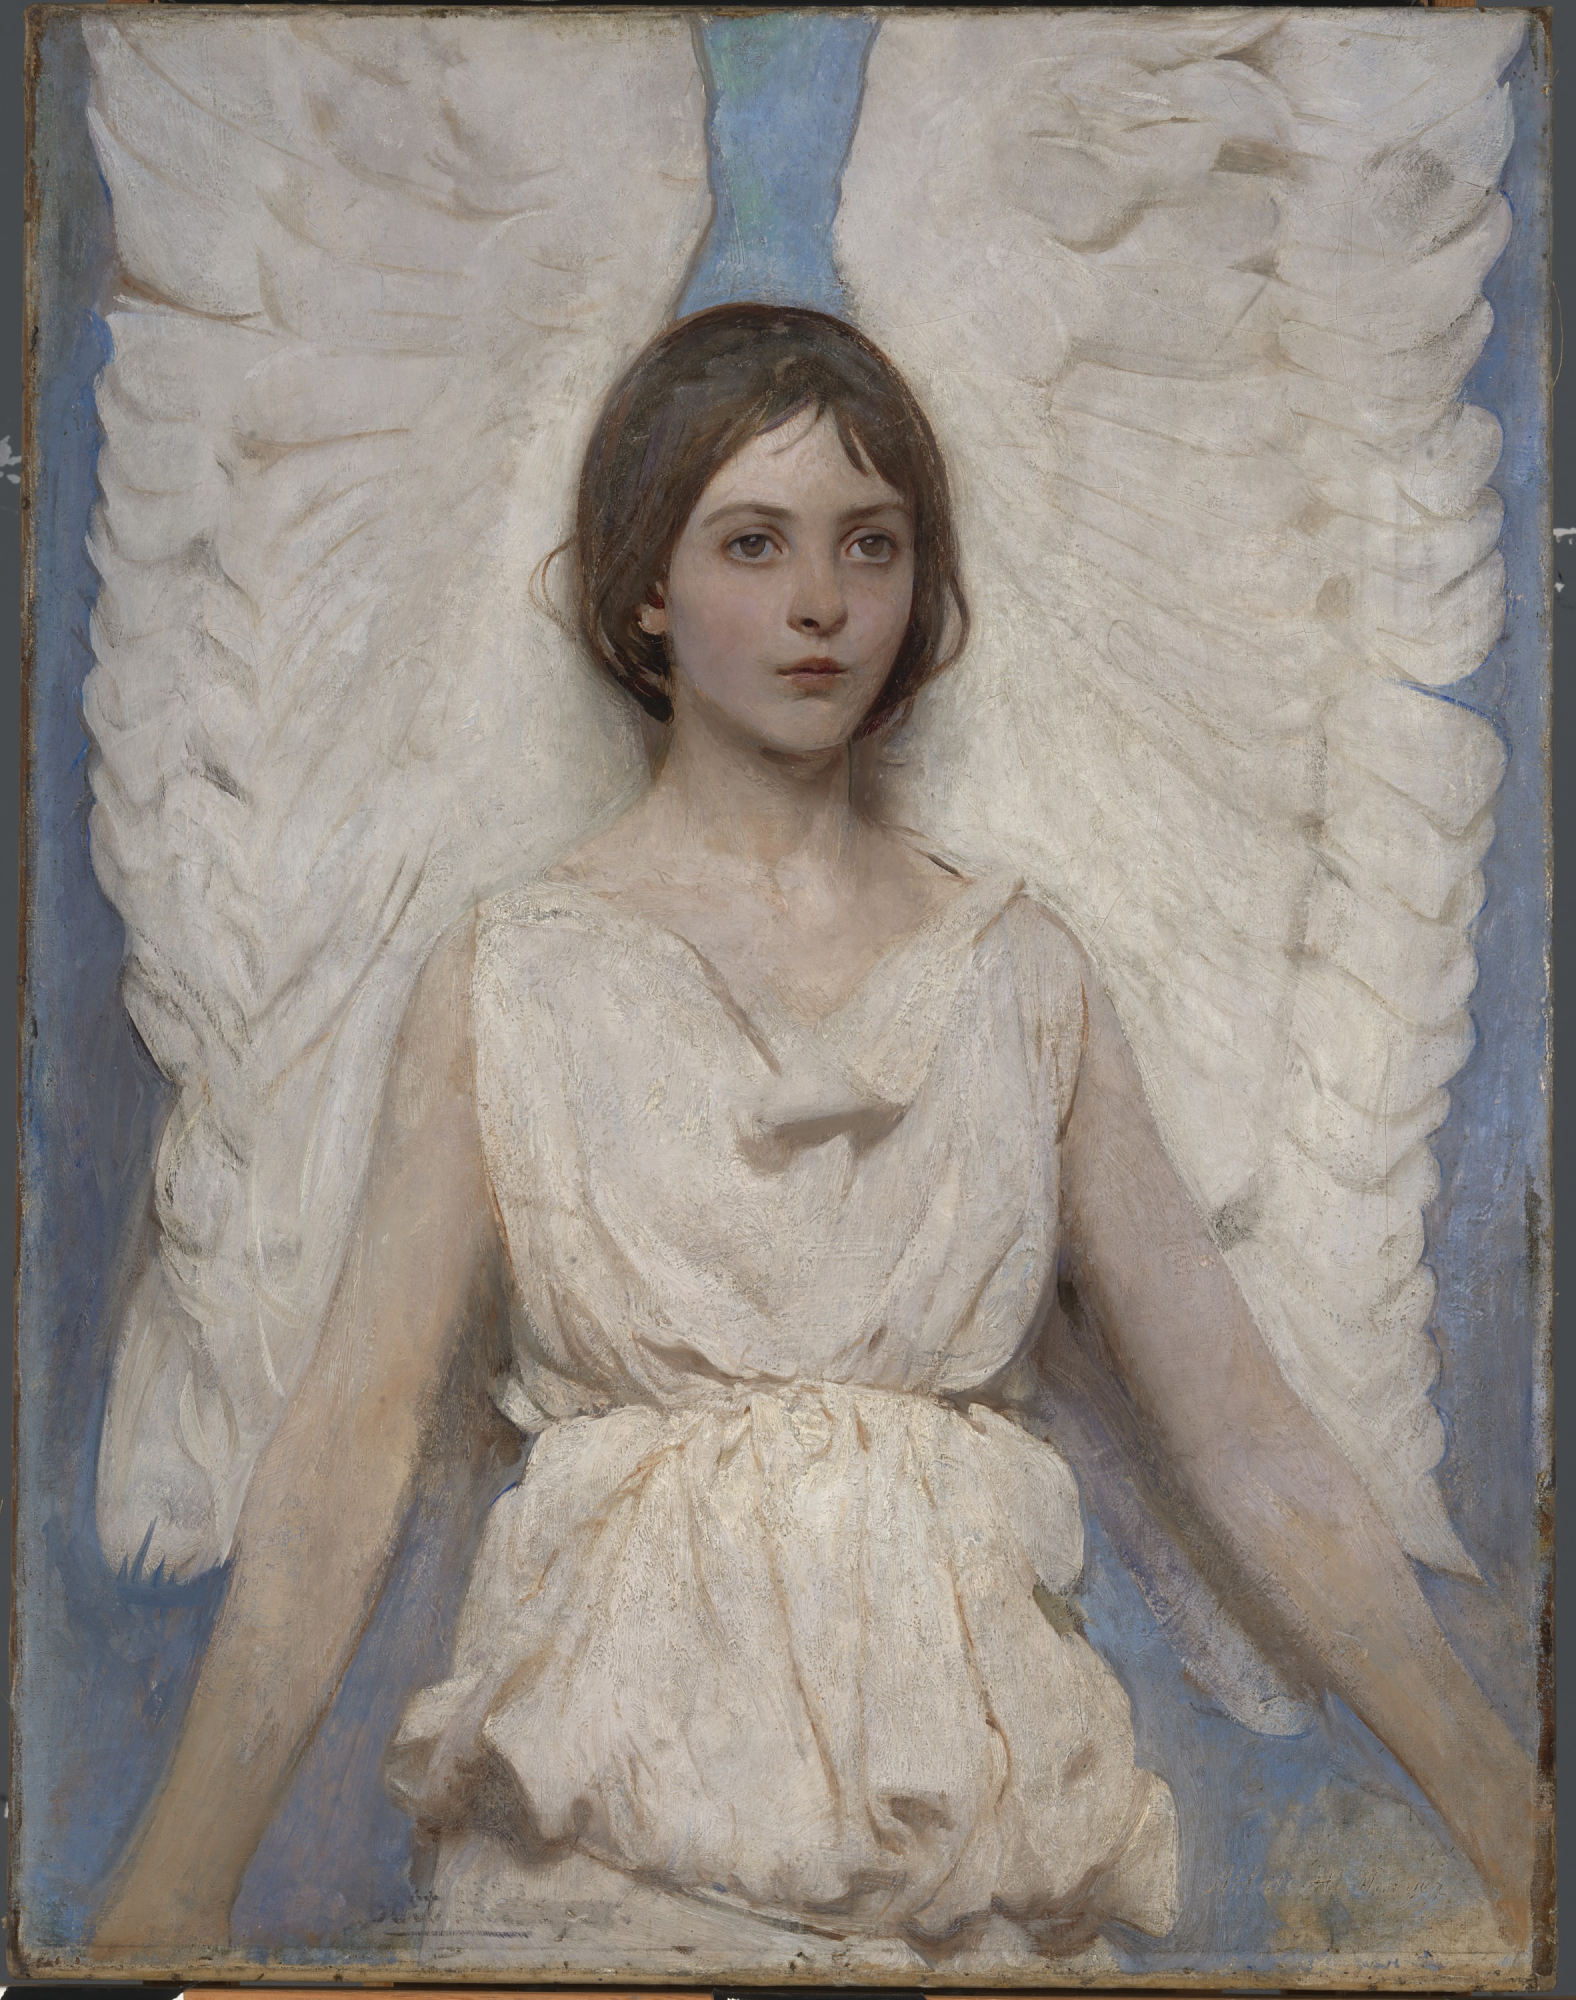 Înger by Abbott Handerson Thayer - 1887 - 92.0 x 71.5 cm 